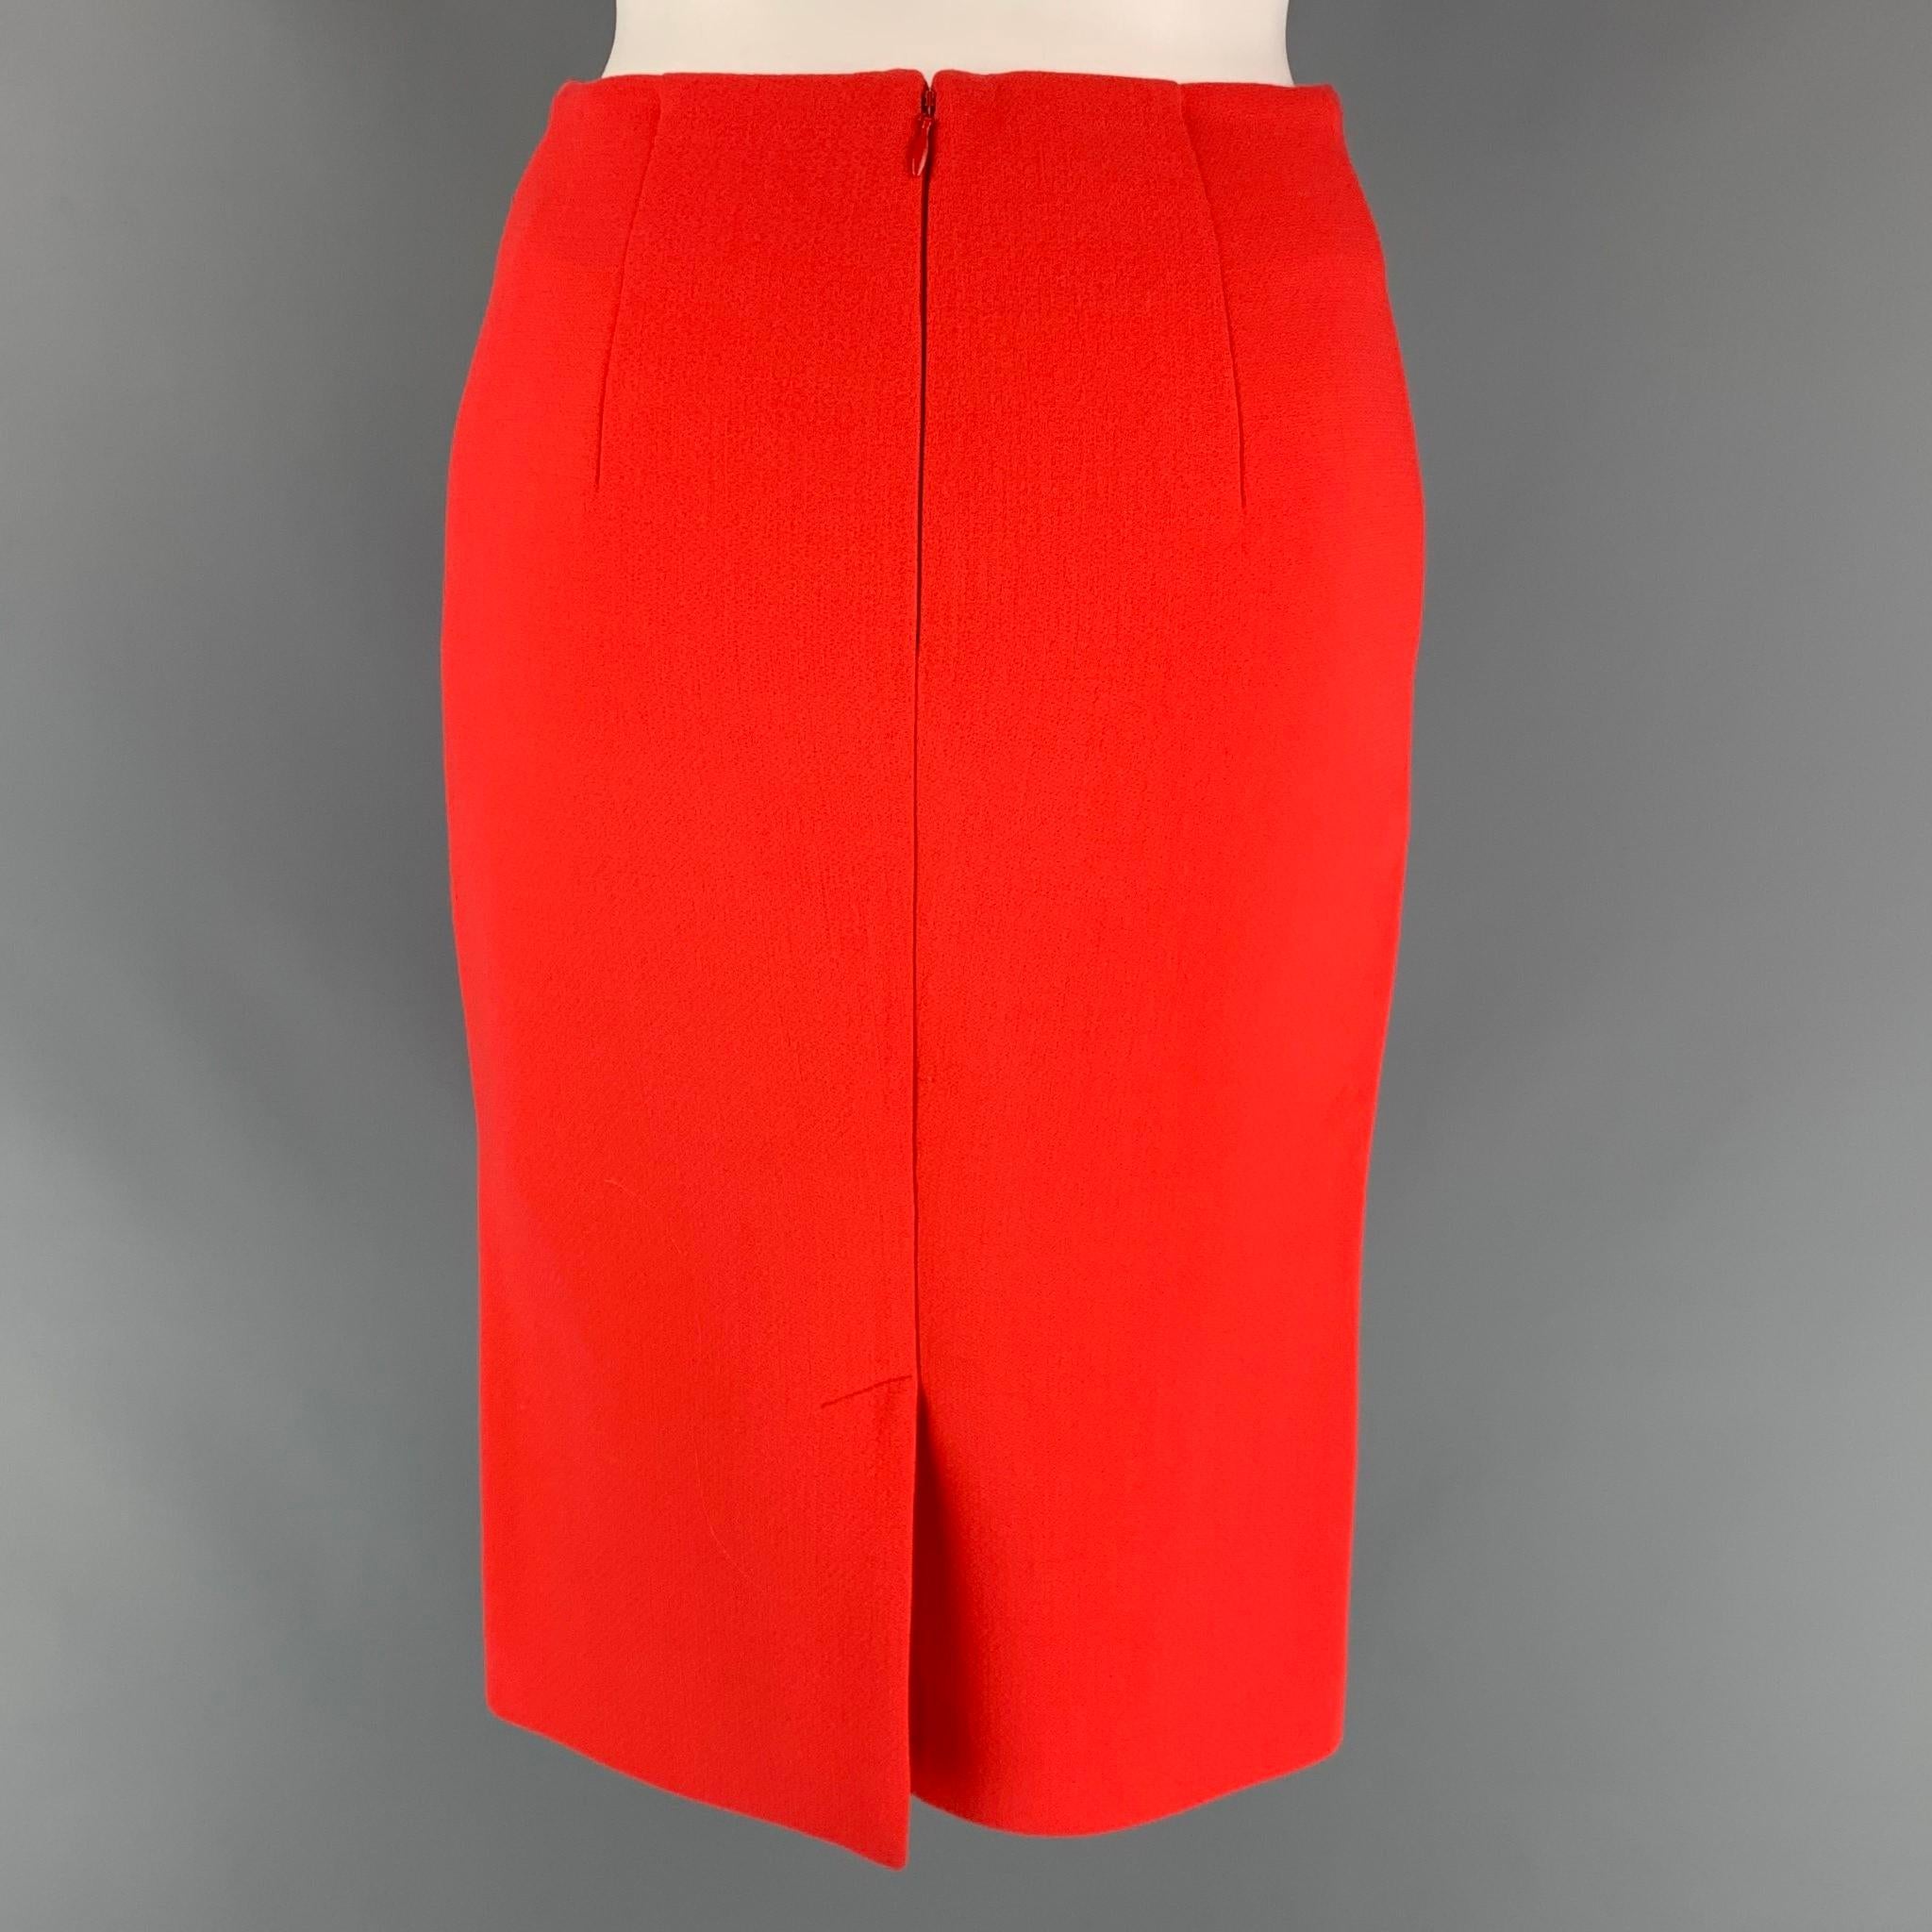 size 0 pencil skirt